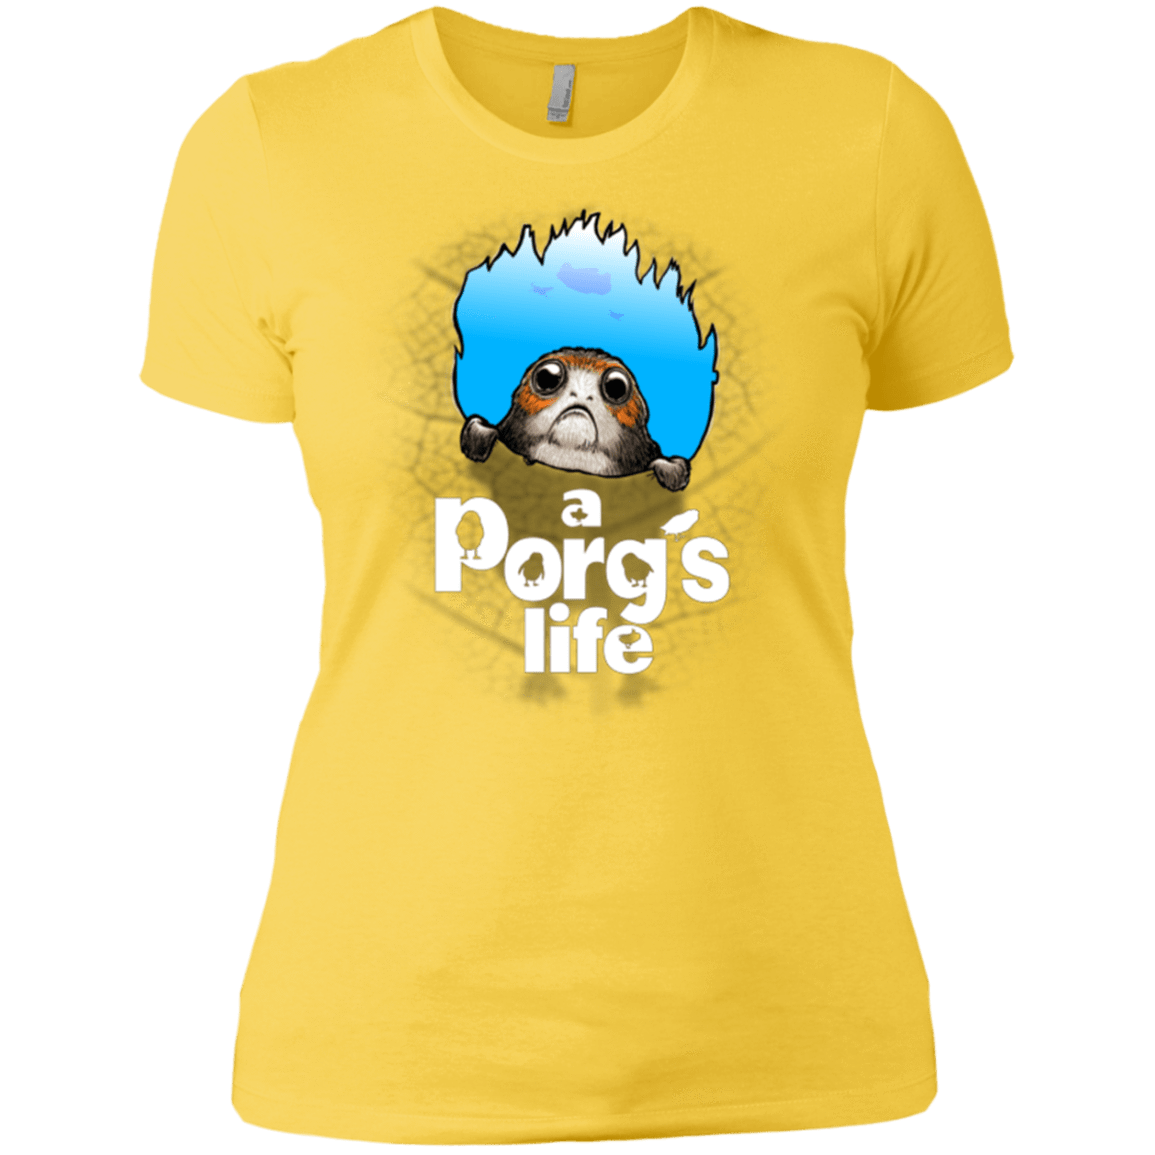 T-Shirts Vibrant Yellow / X-Small A Porgs Life Women's Premium T-Shirt